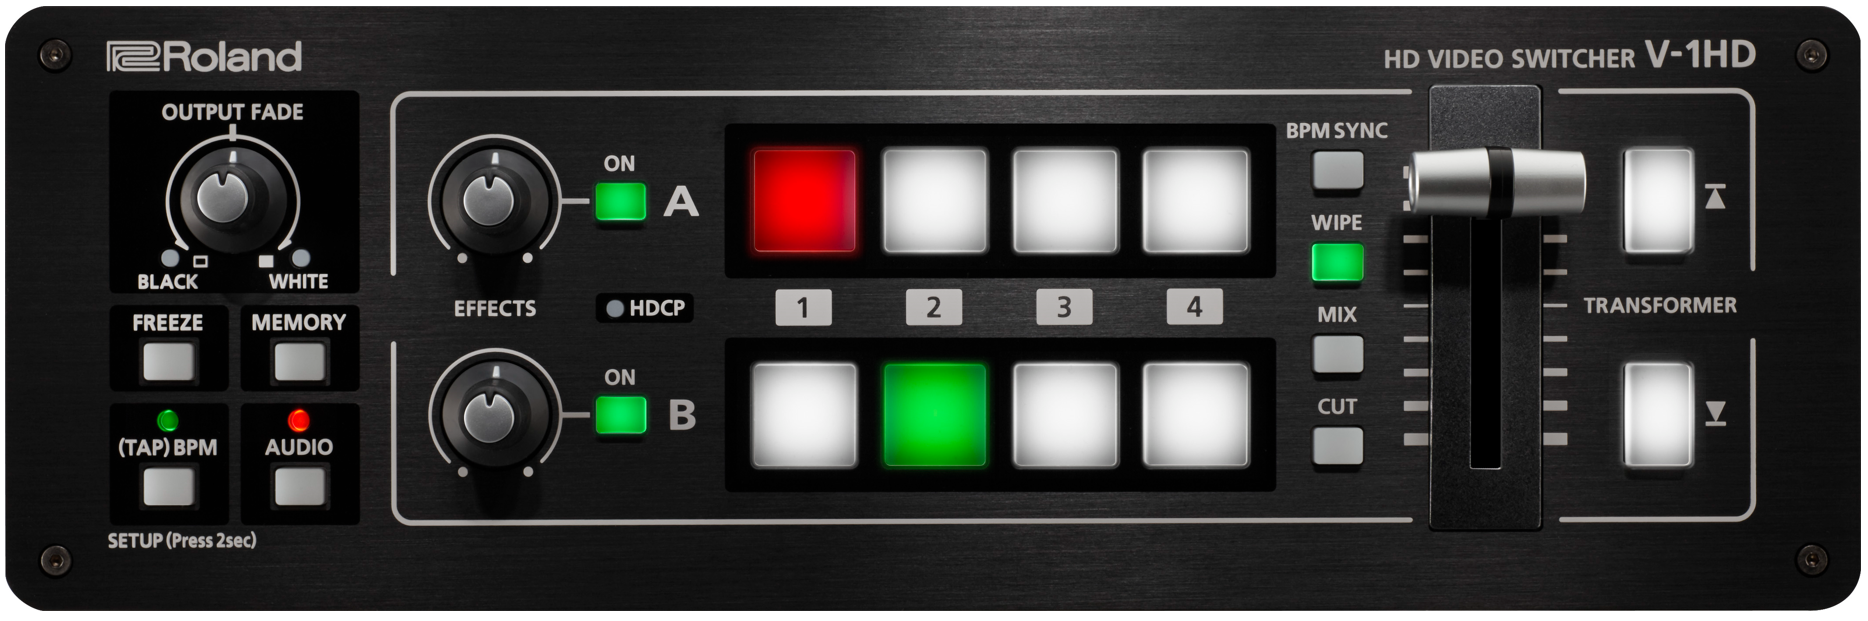 V-1HD: Quickstart Guide – Roland Corporation